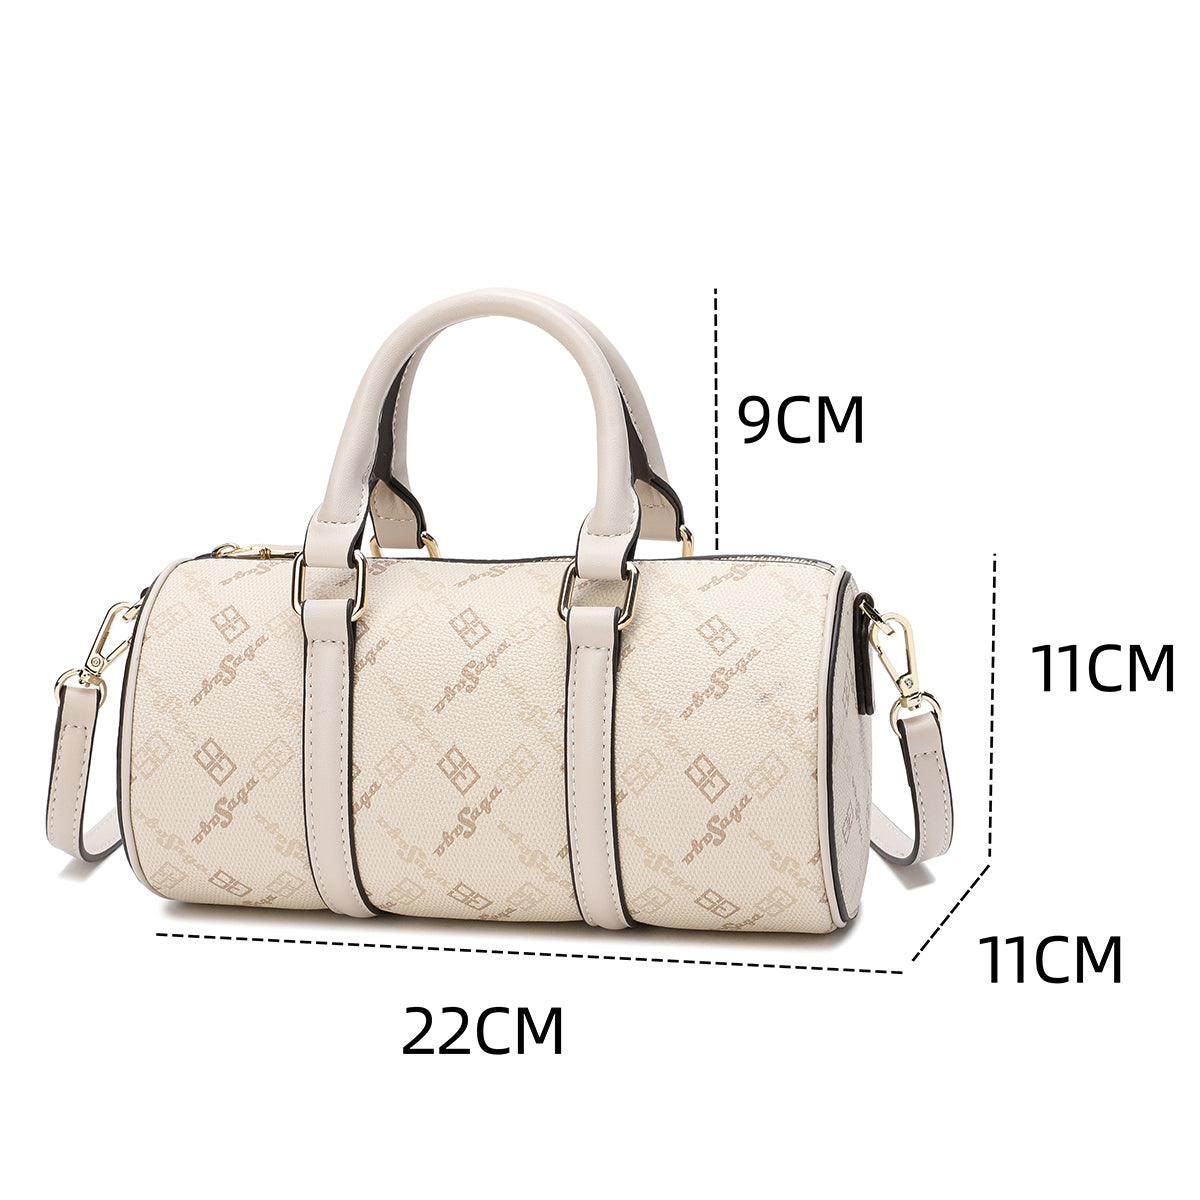 An elegant bag with a long shoulder strap, width 22 cm, brown or cream color